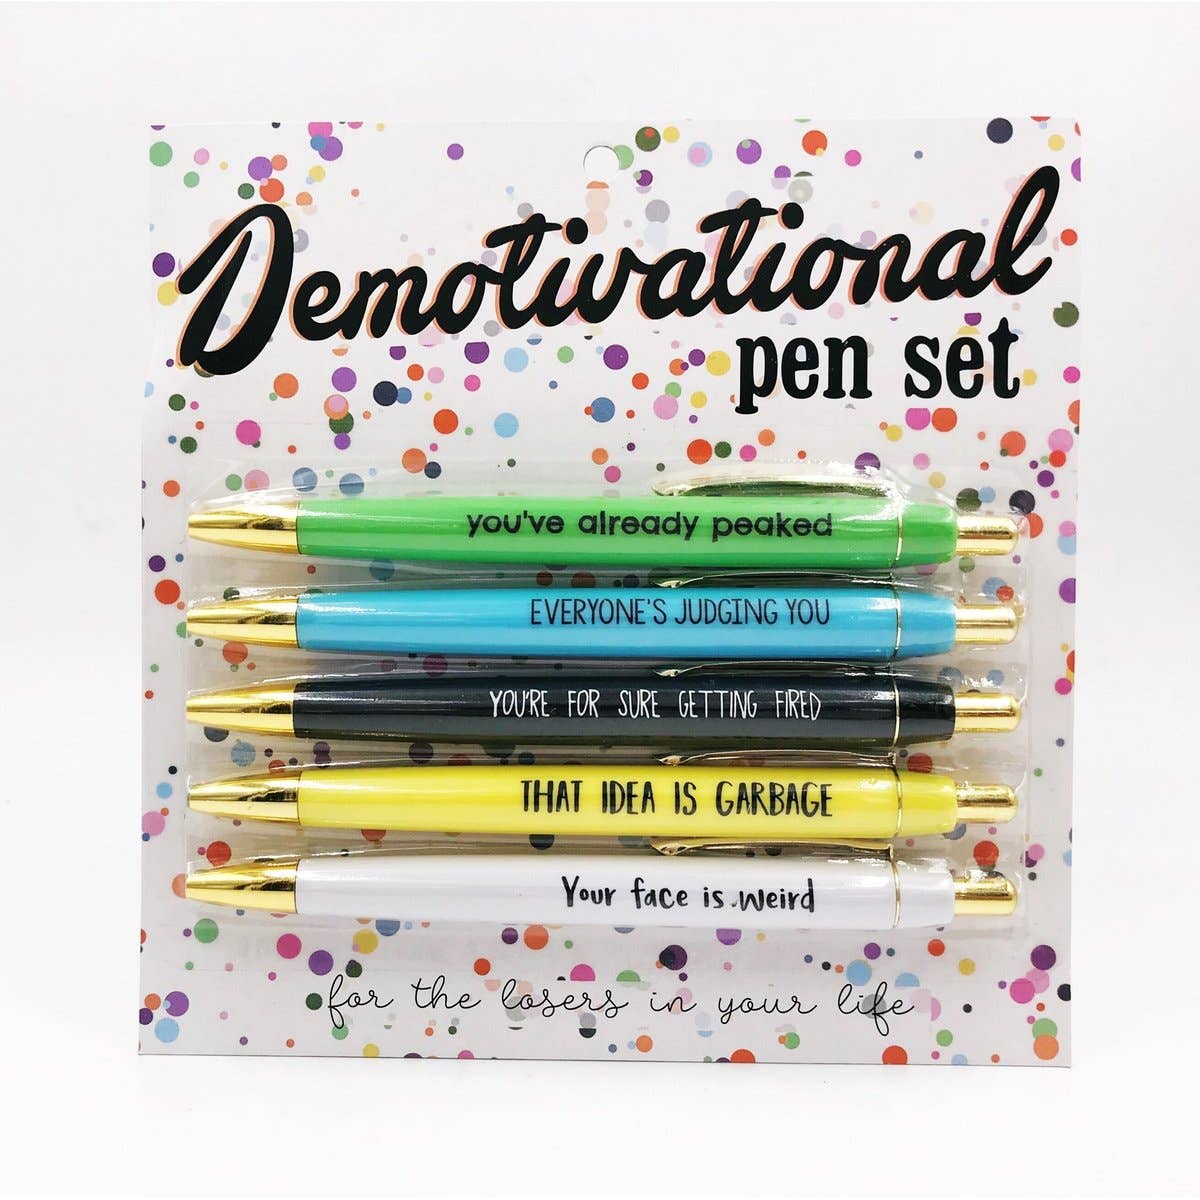 The Demotivational Pen Set